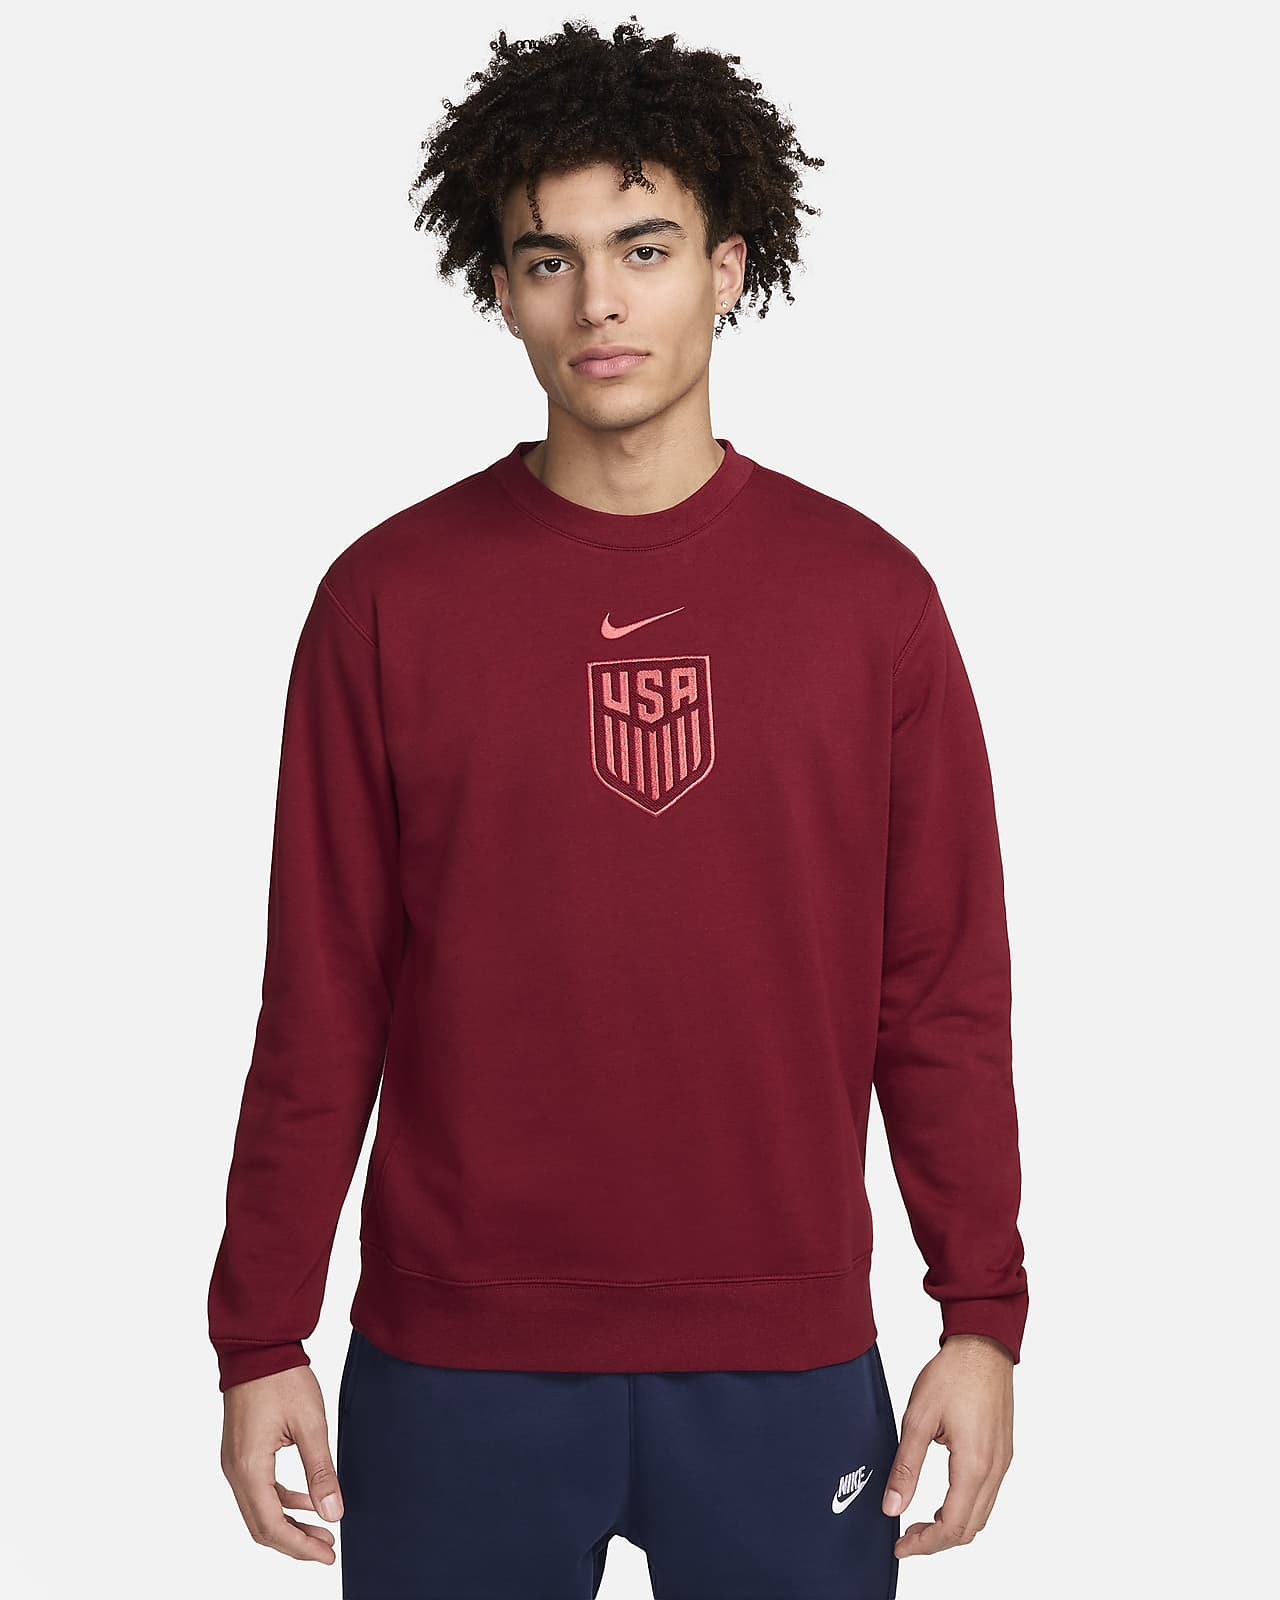 USMNT Club Men's Nike Soccer Crew-Neck Sweatshirt